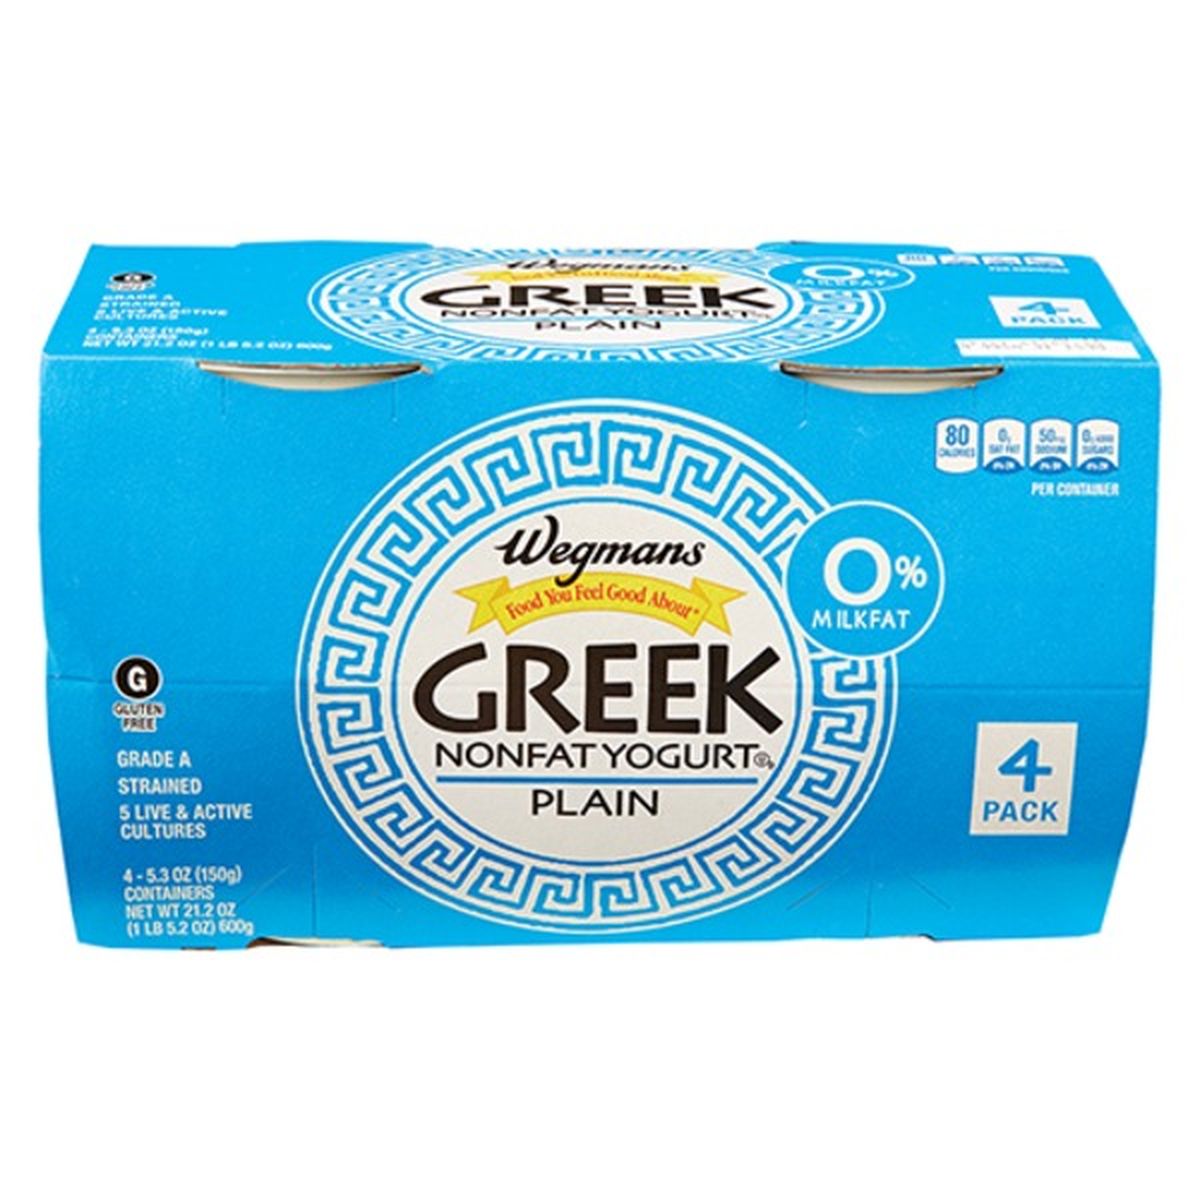 Calories in Wegmans Greek Plain Nonfat Yogurt, 4 PACK